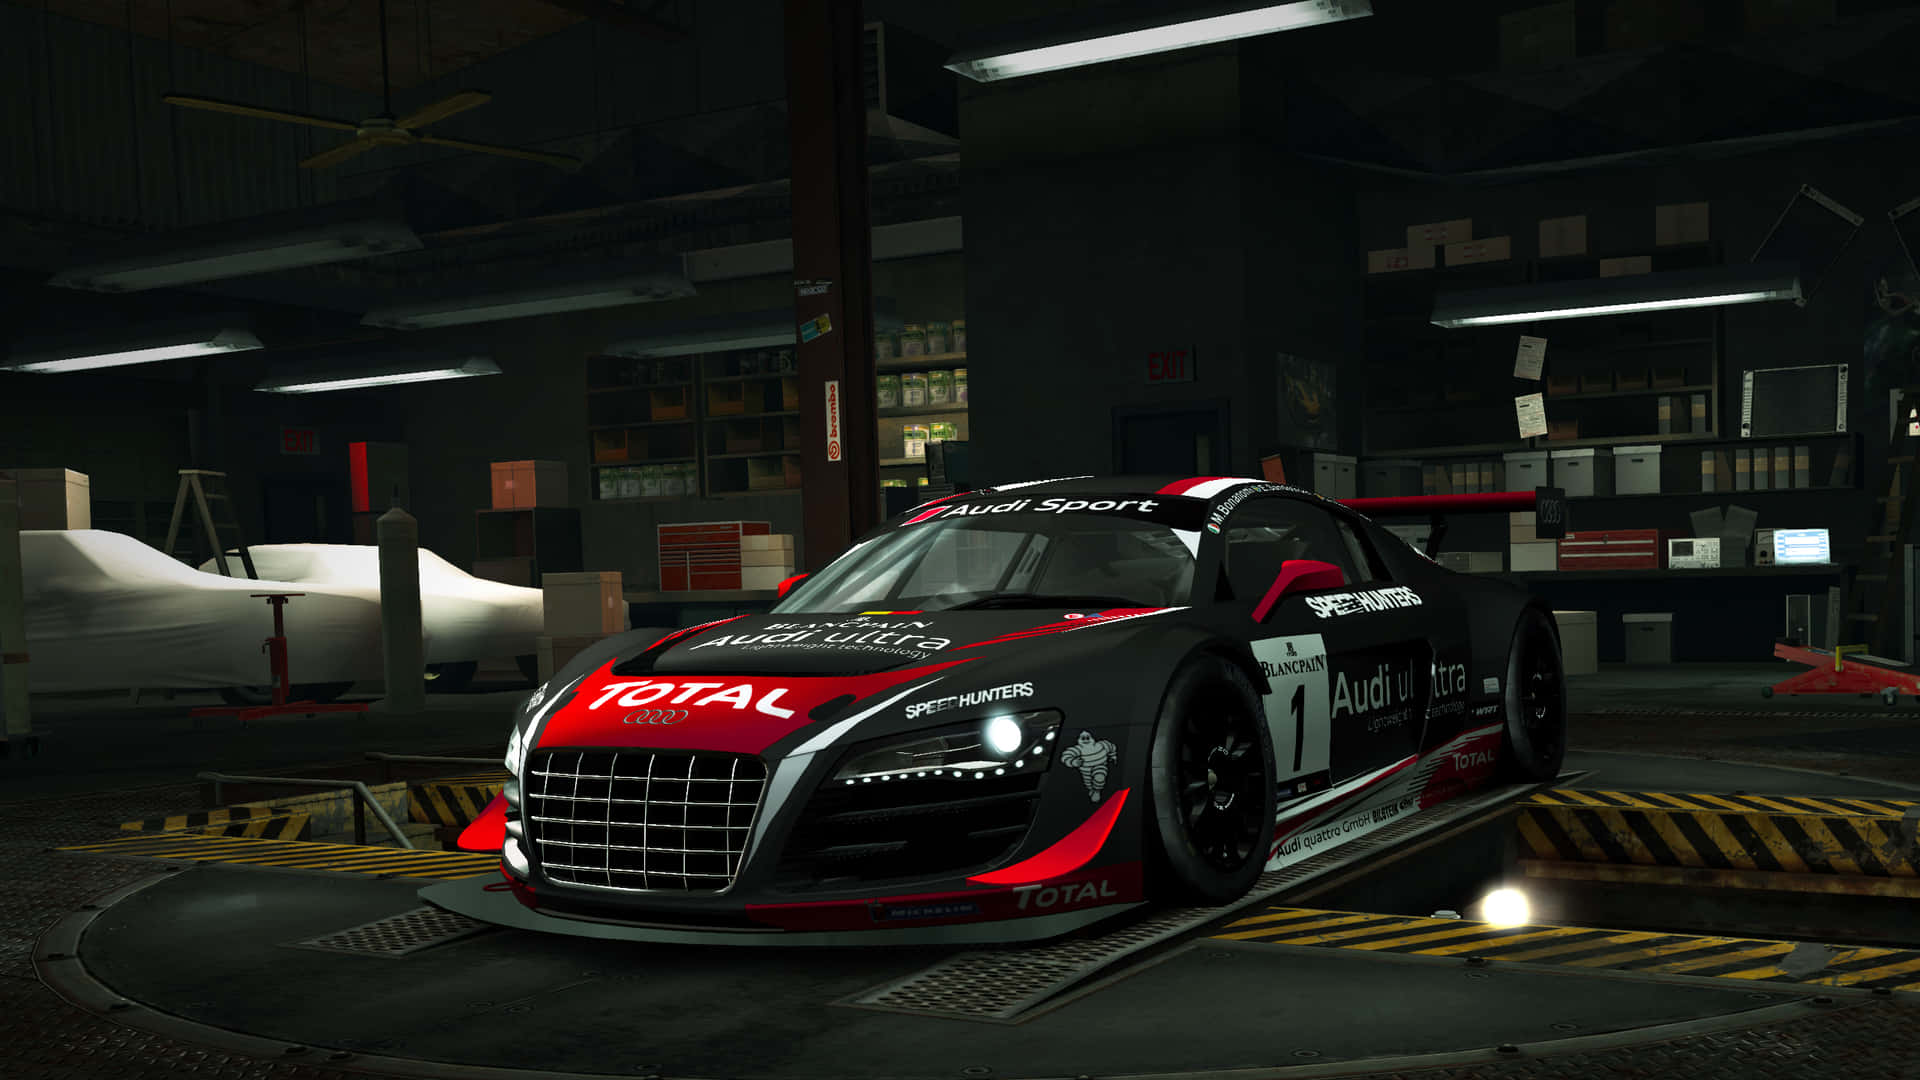 N F S World Audi R8 Garage Scene Wallpaper